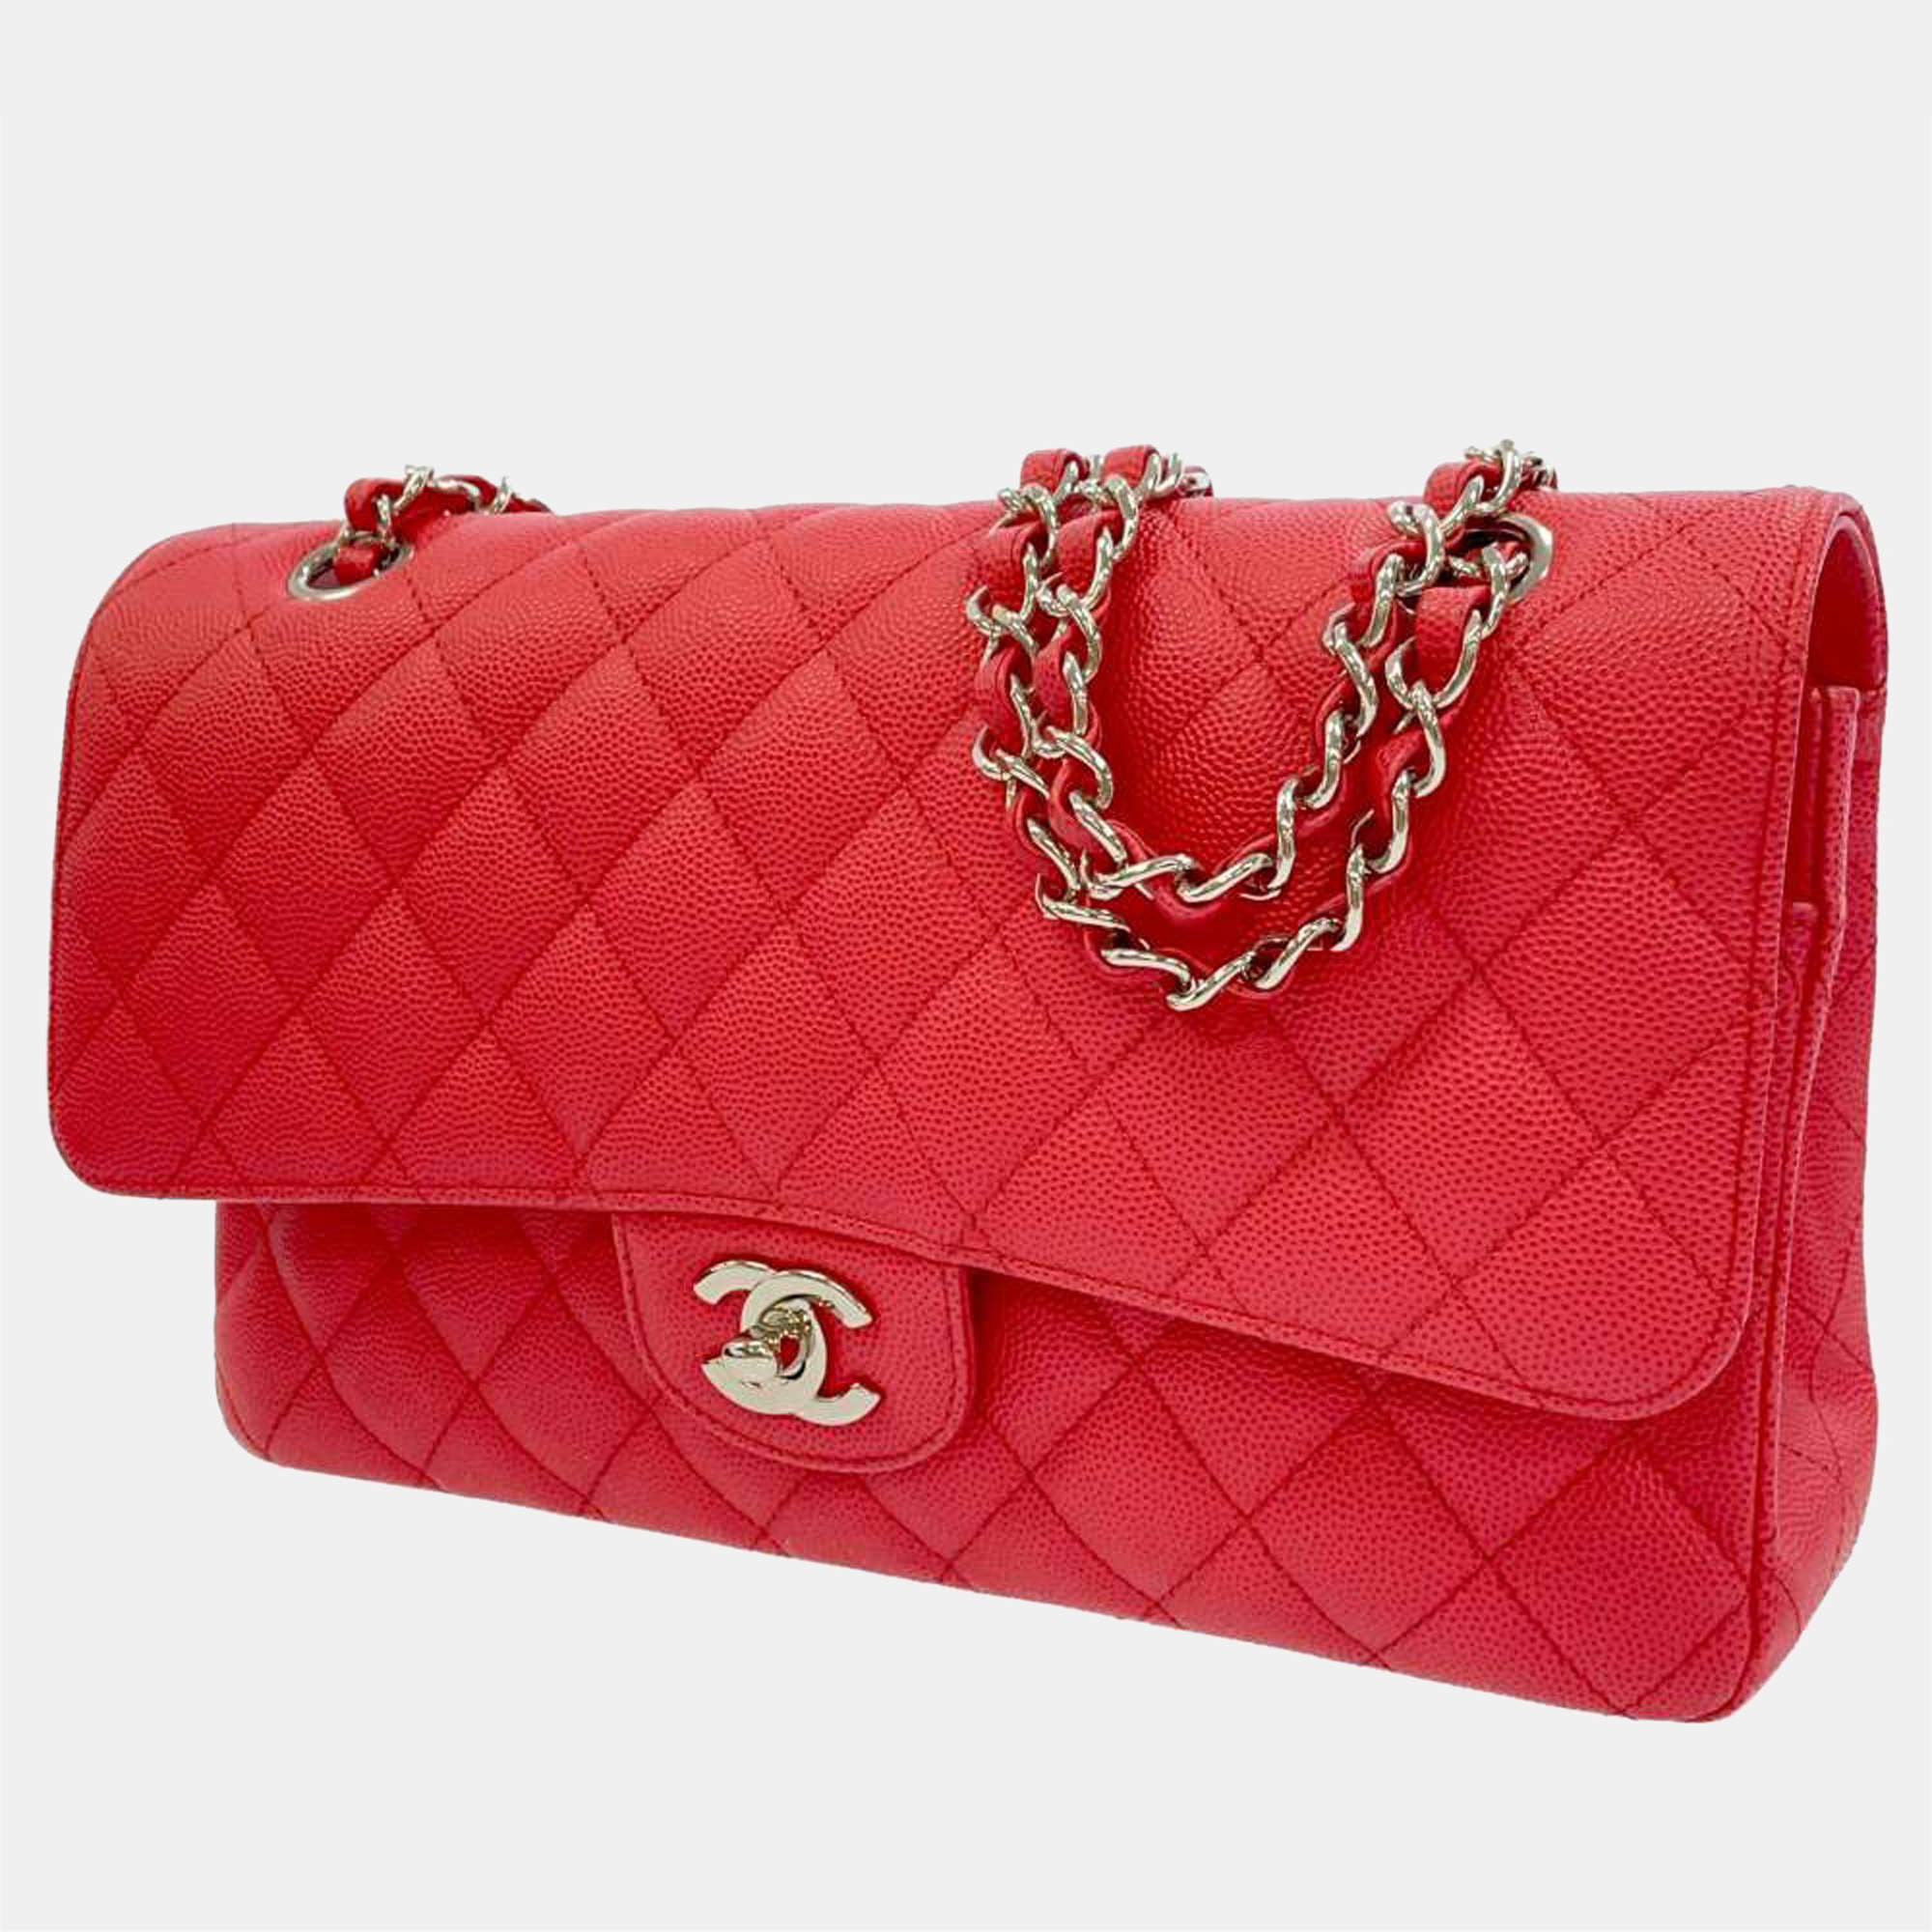 Red Chanel Bag  Etsy